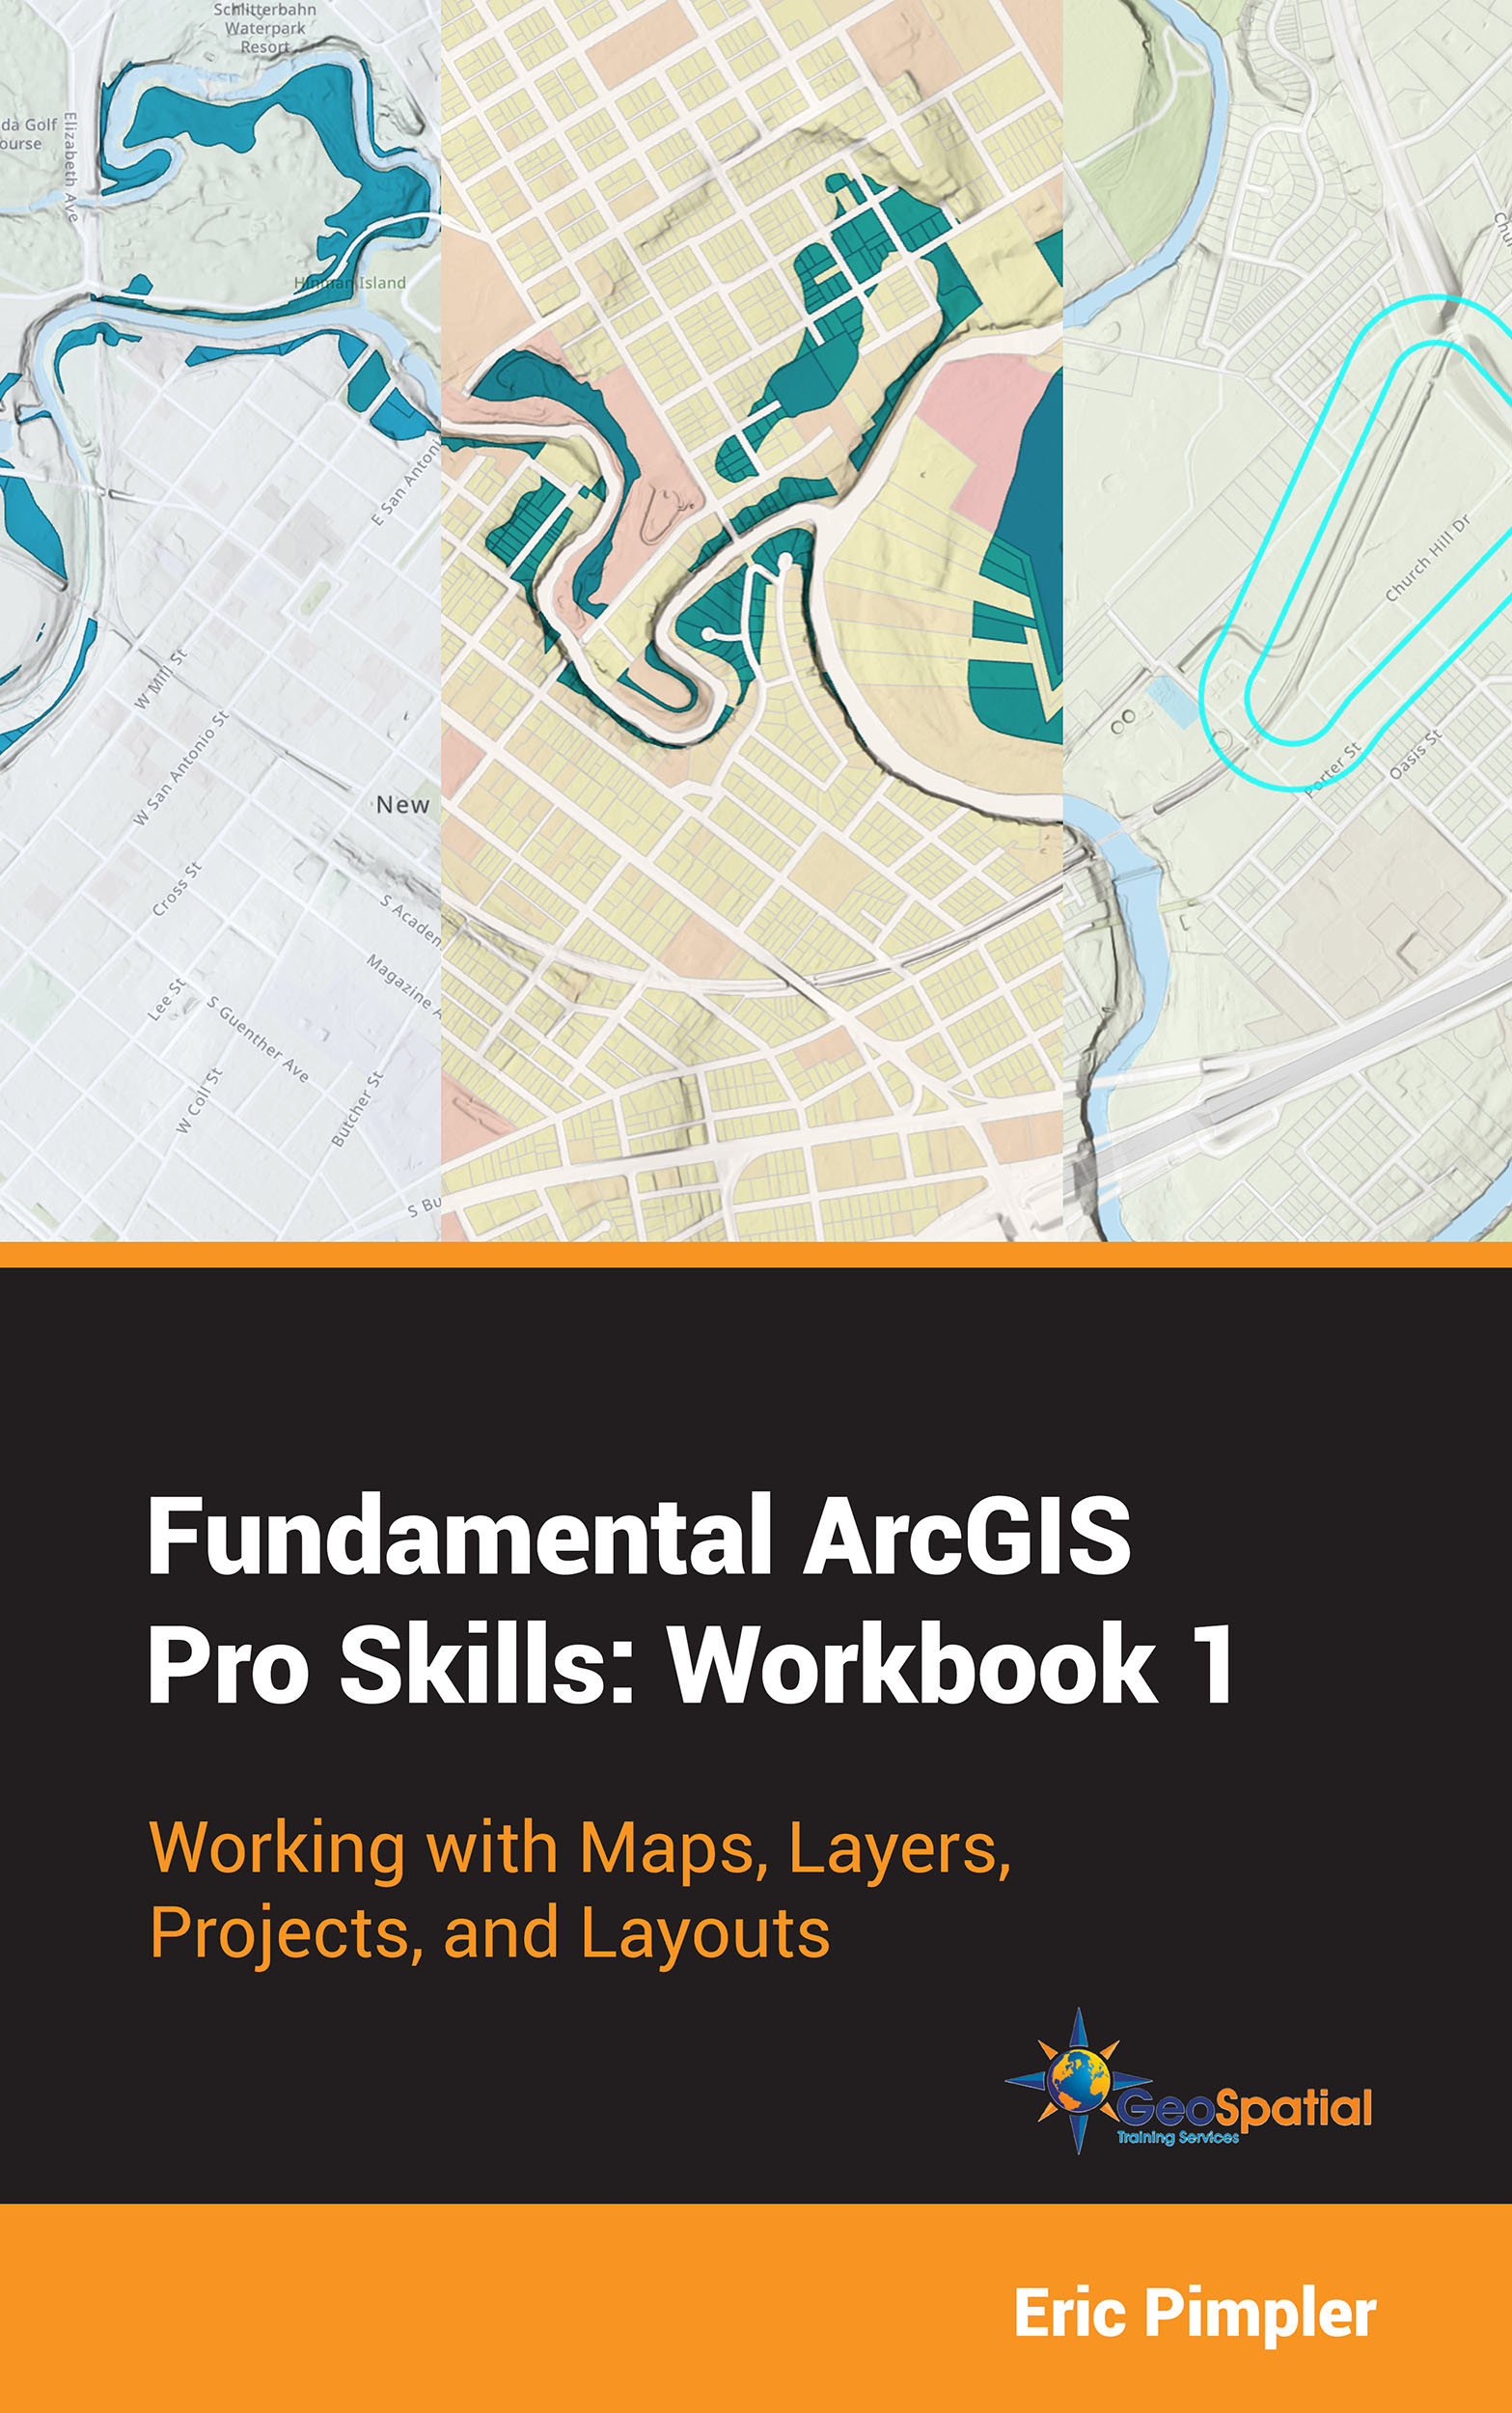 Our New Book – Fundamental ArcGIS Pro Skills: Workbook 1